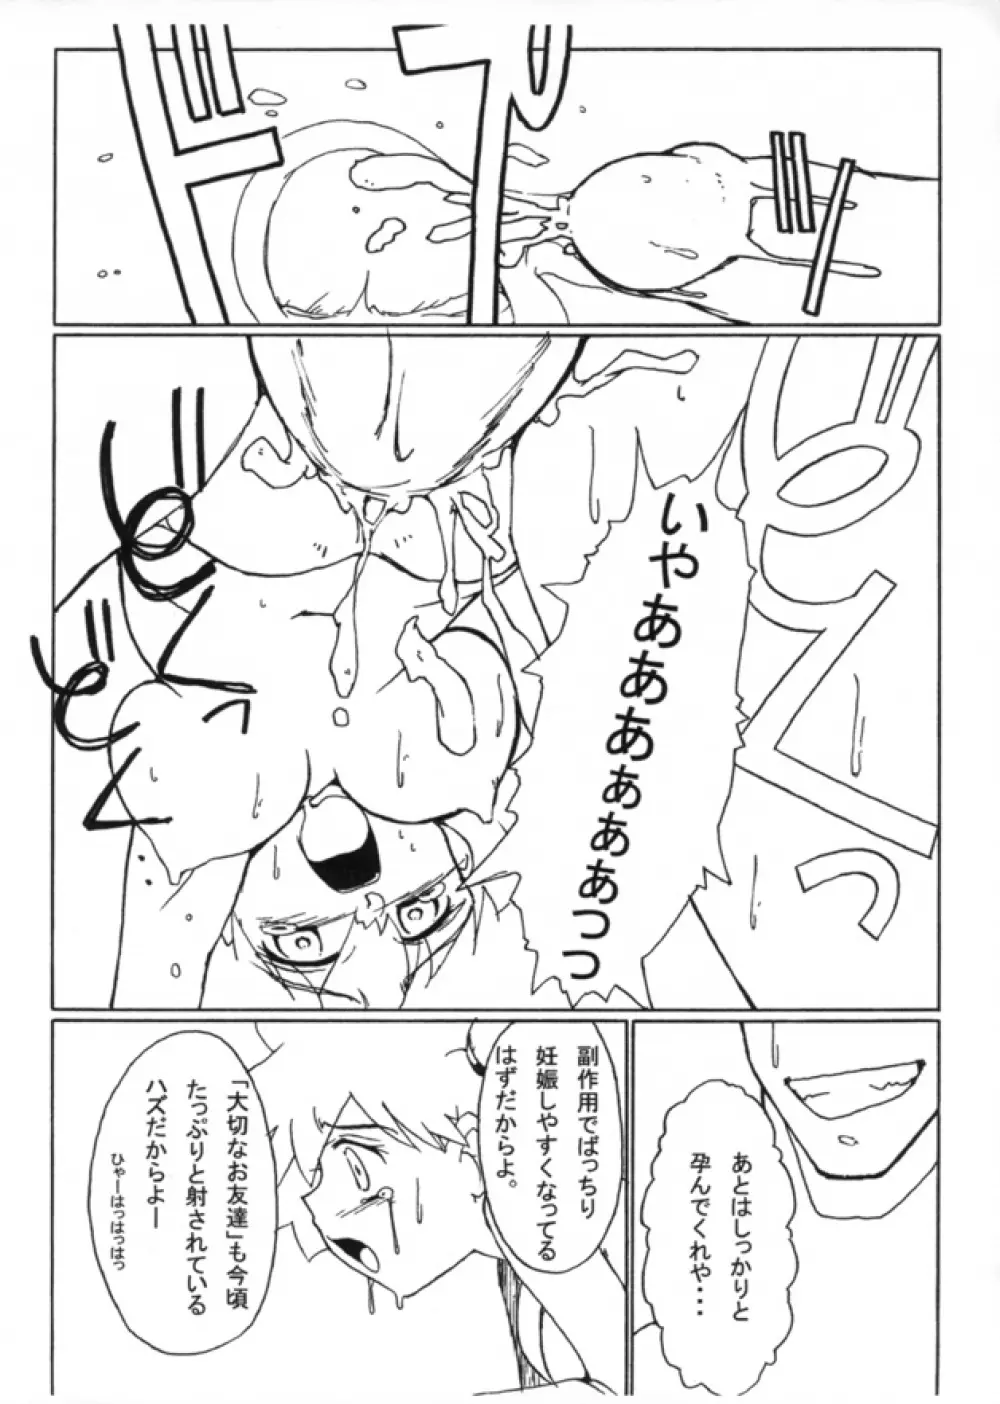 KASUMIX XPLOSION Kasumi Comic part5 - page59